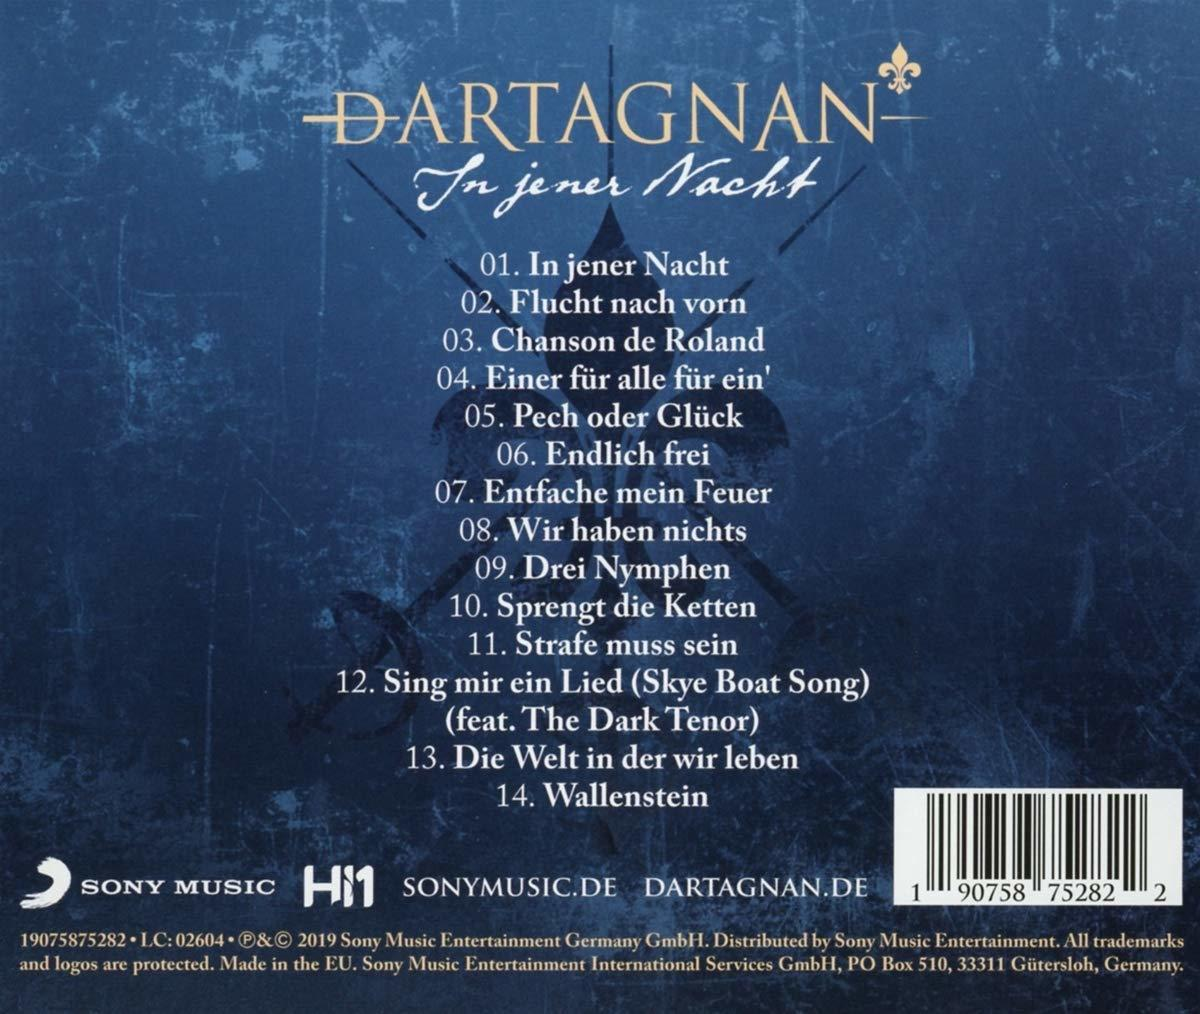 jener - In Dartagnan - Nacht (CD)